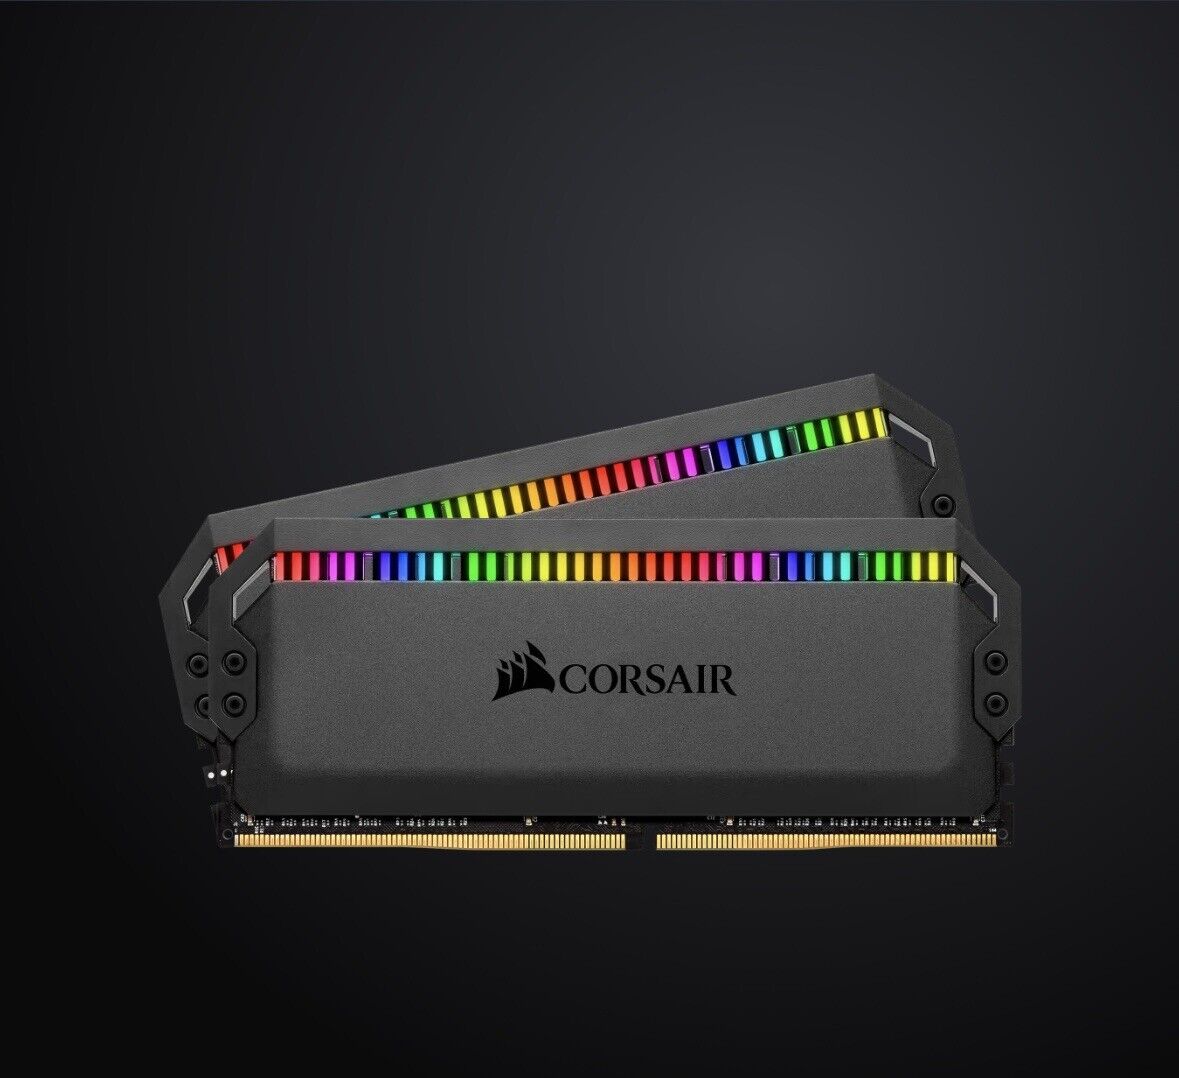 Corsair Dominator Platinum RGB 32GB (2 x 16GB) DDR4 RAM Kit